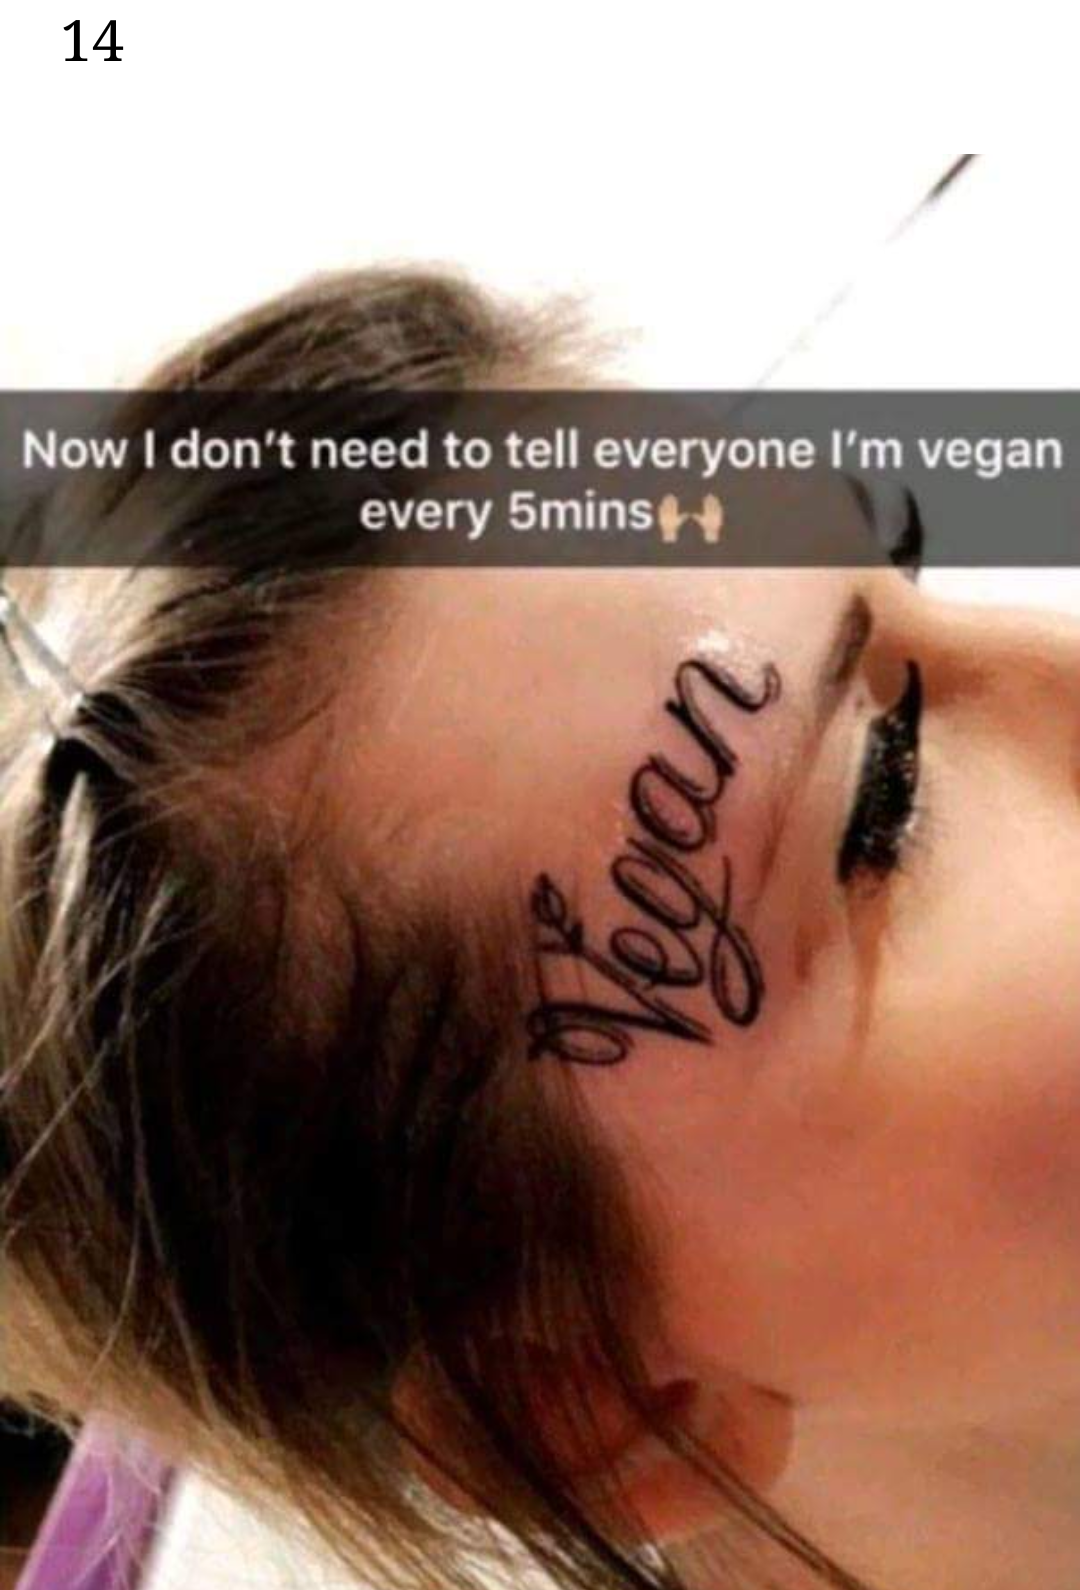 vegan forehead tattoo - Now I don't need to tell everyone I'm vegan every 5mins Vegan